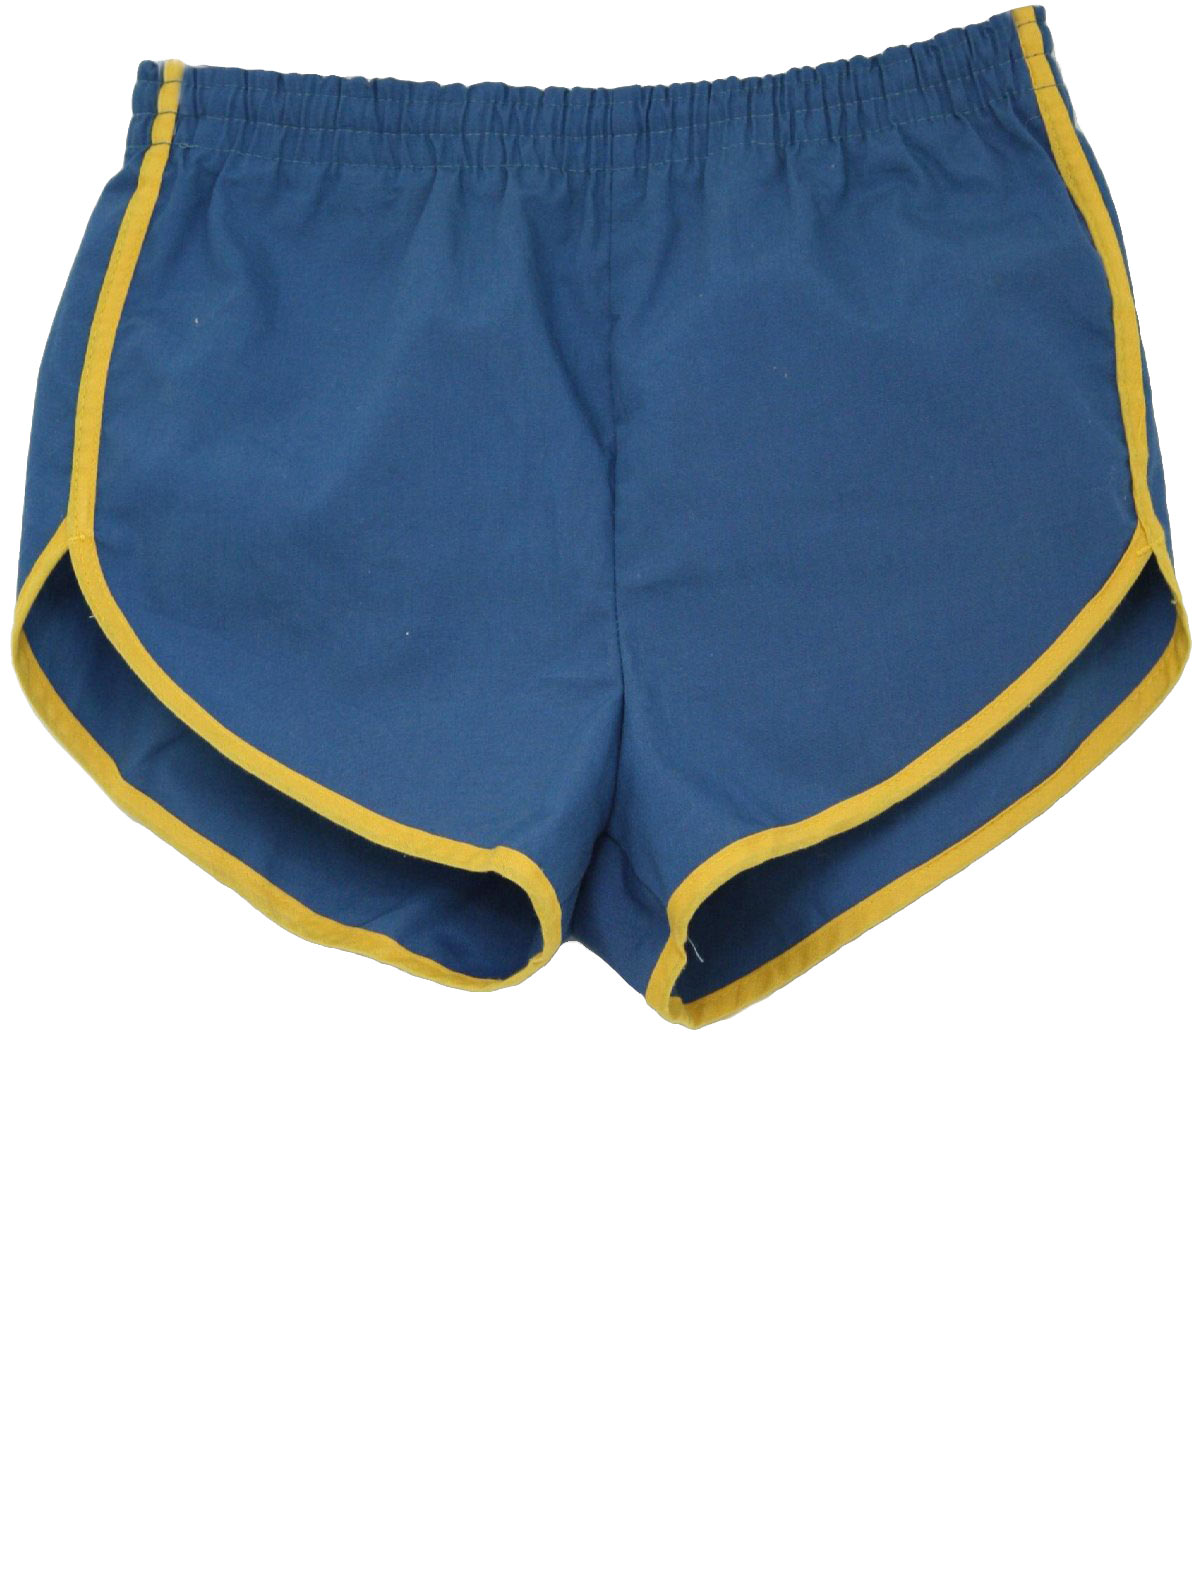 1970s Care Label Swimsuit/Swimwear: 70s -Care Label- Mens medim blue ...